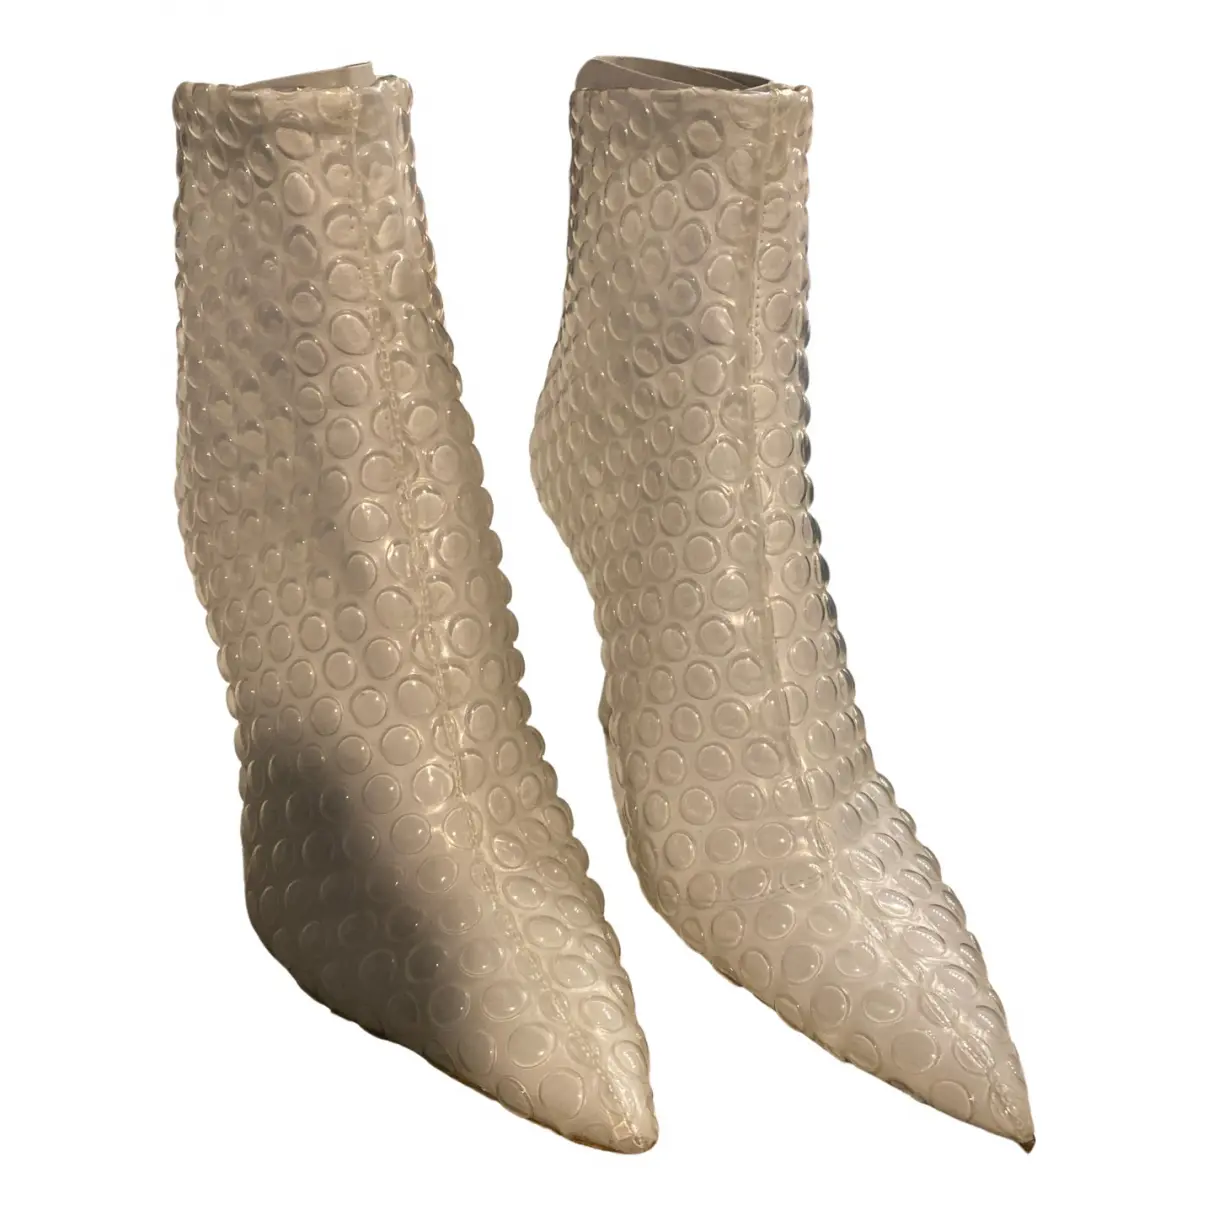 Patent leather ankle boots Maison Martin Margiela